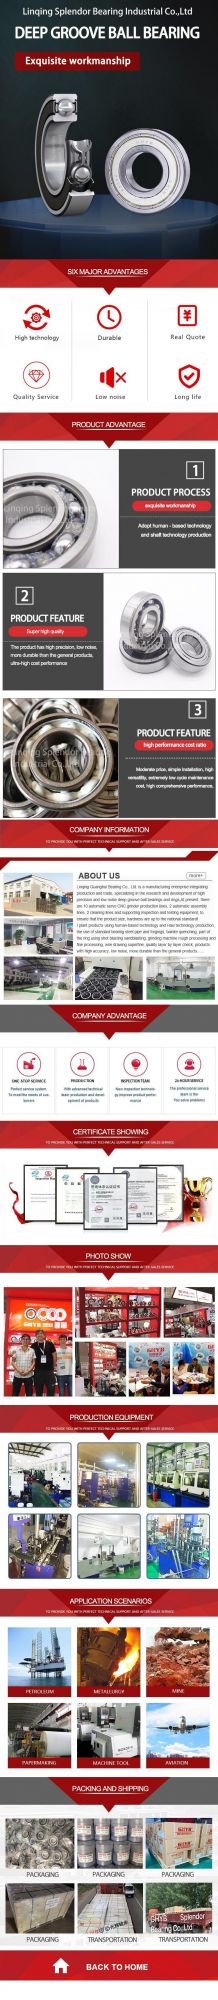 China Factory Distributor Supplier of Deep Groove Ball Bearings for Motors, Compressors, Alternators 6304-2rz/P6/Z2V2